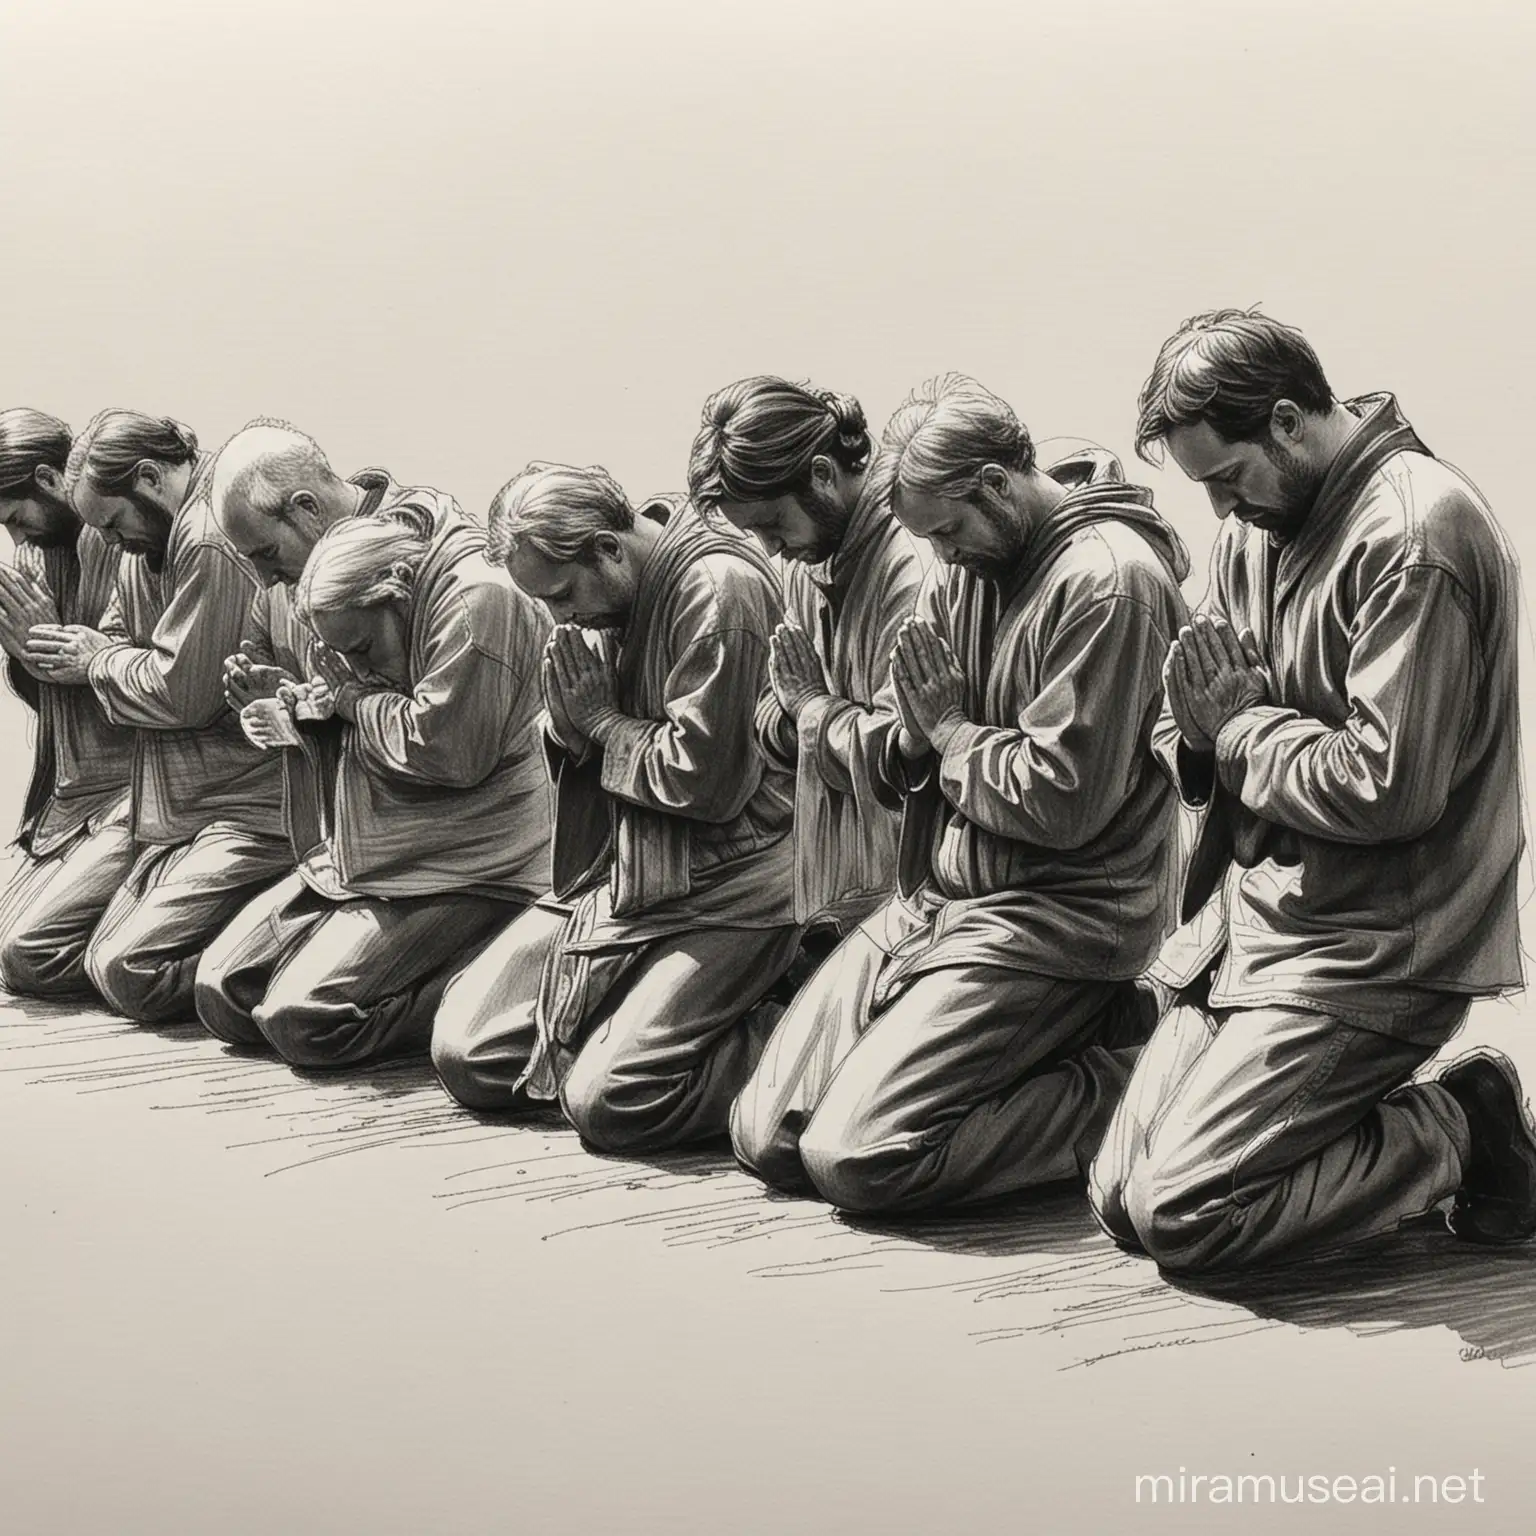 black and white pen sketch of people kneeling in prayer
